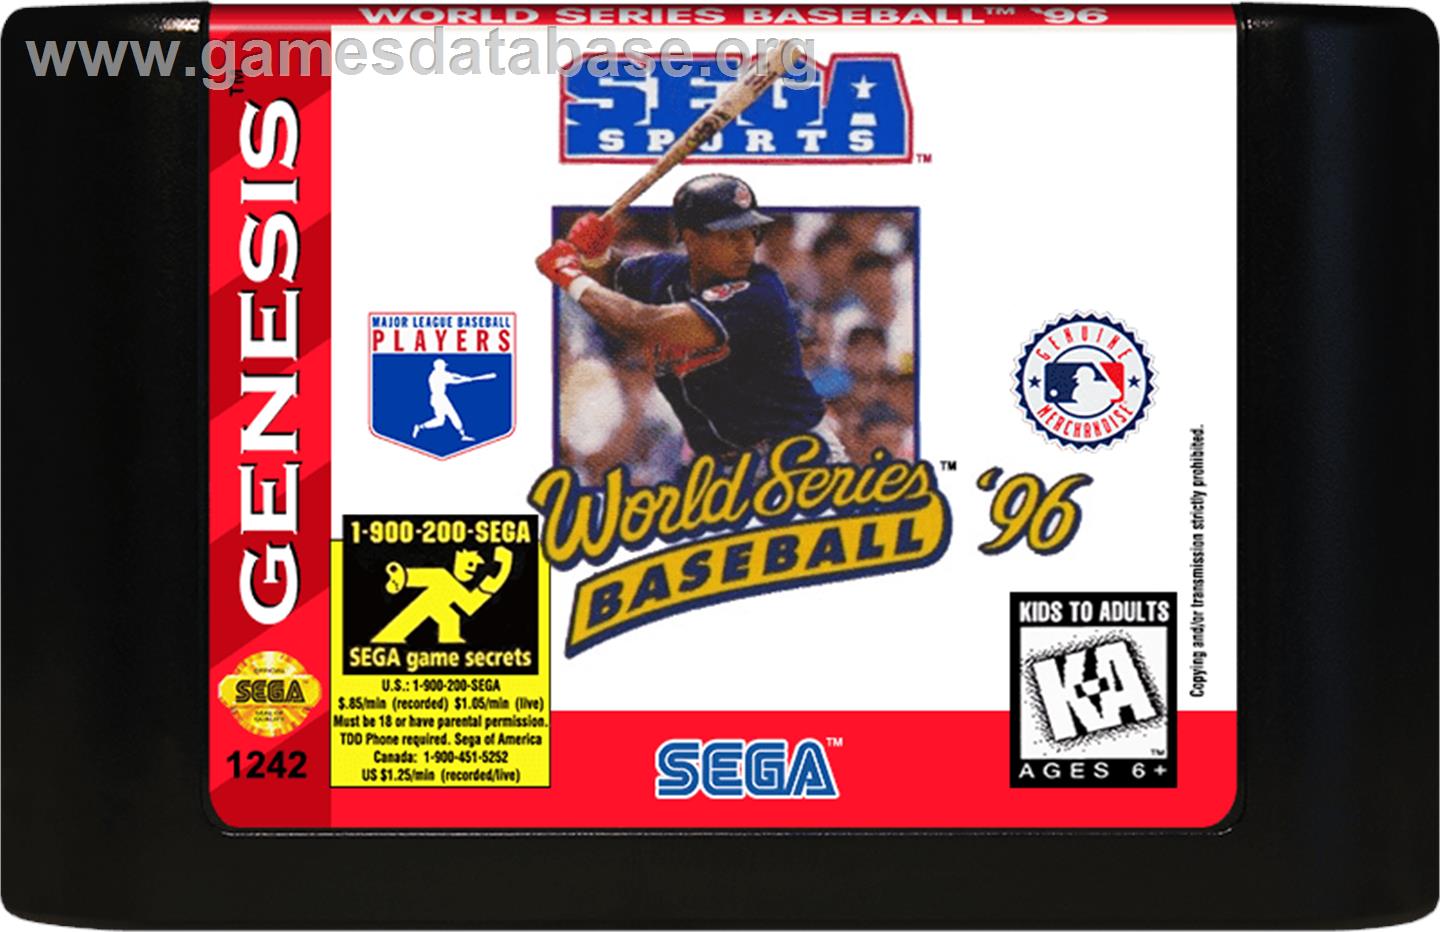 World Series Baseball '96 - Sega Genesis - Artwork - Cartridge